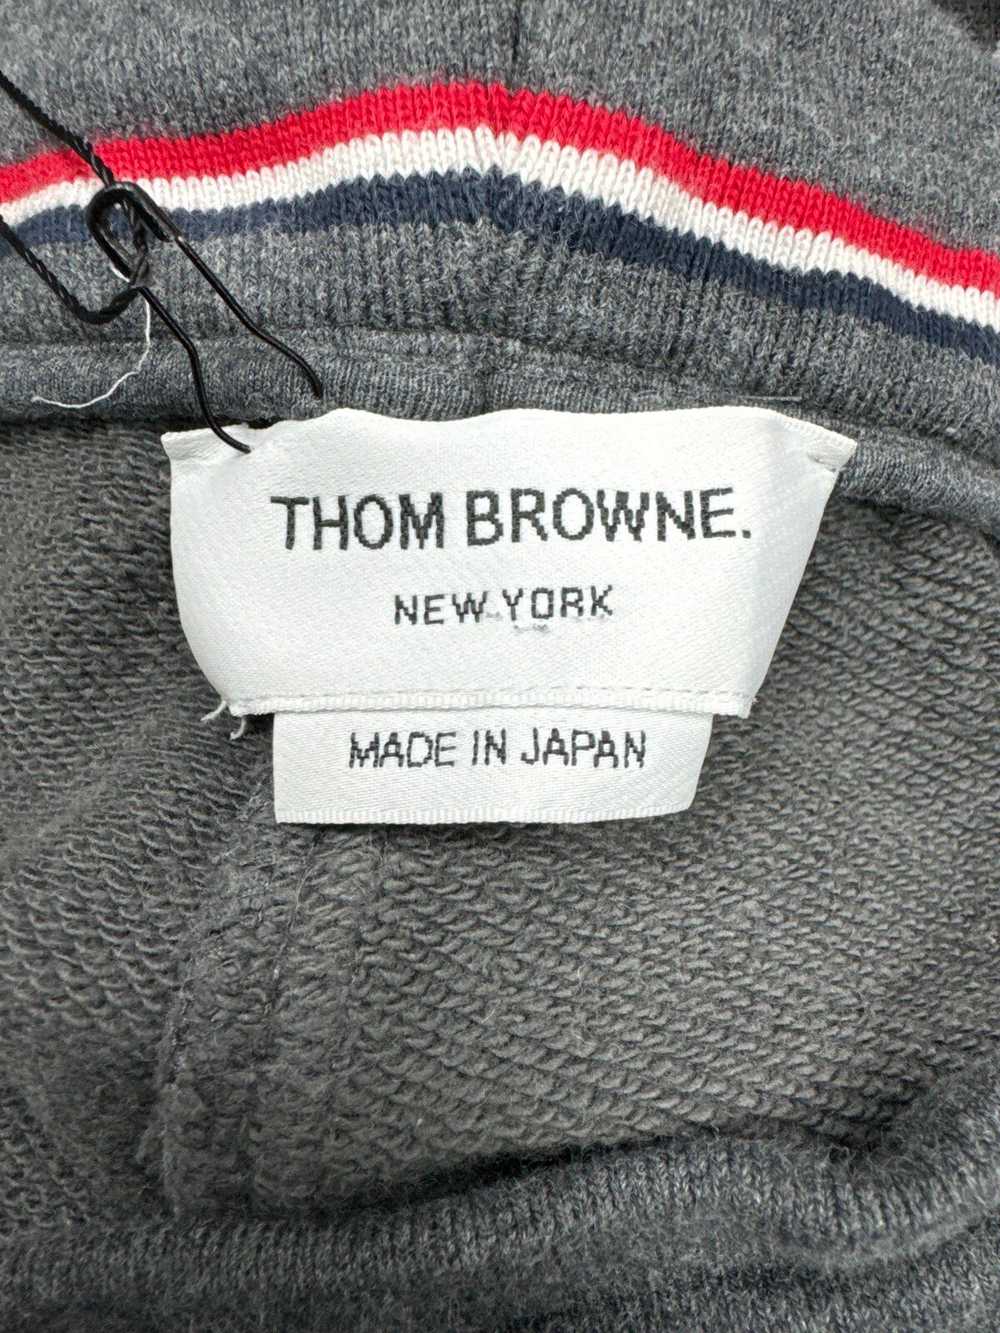 Thom Browne Thom browne shorts - image 2